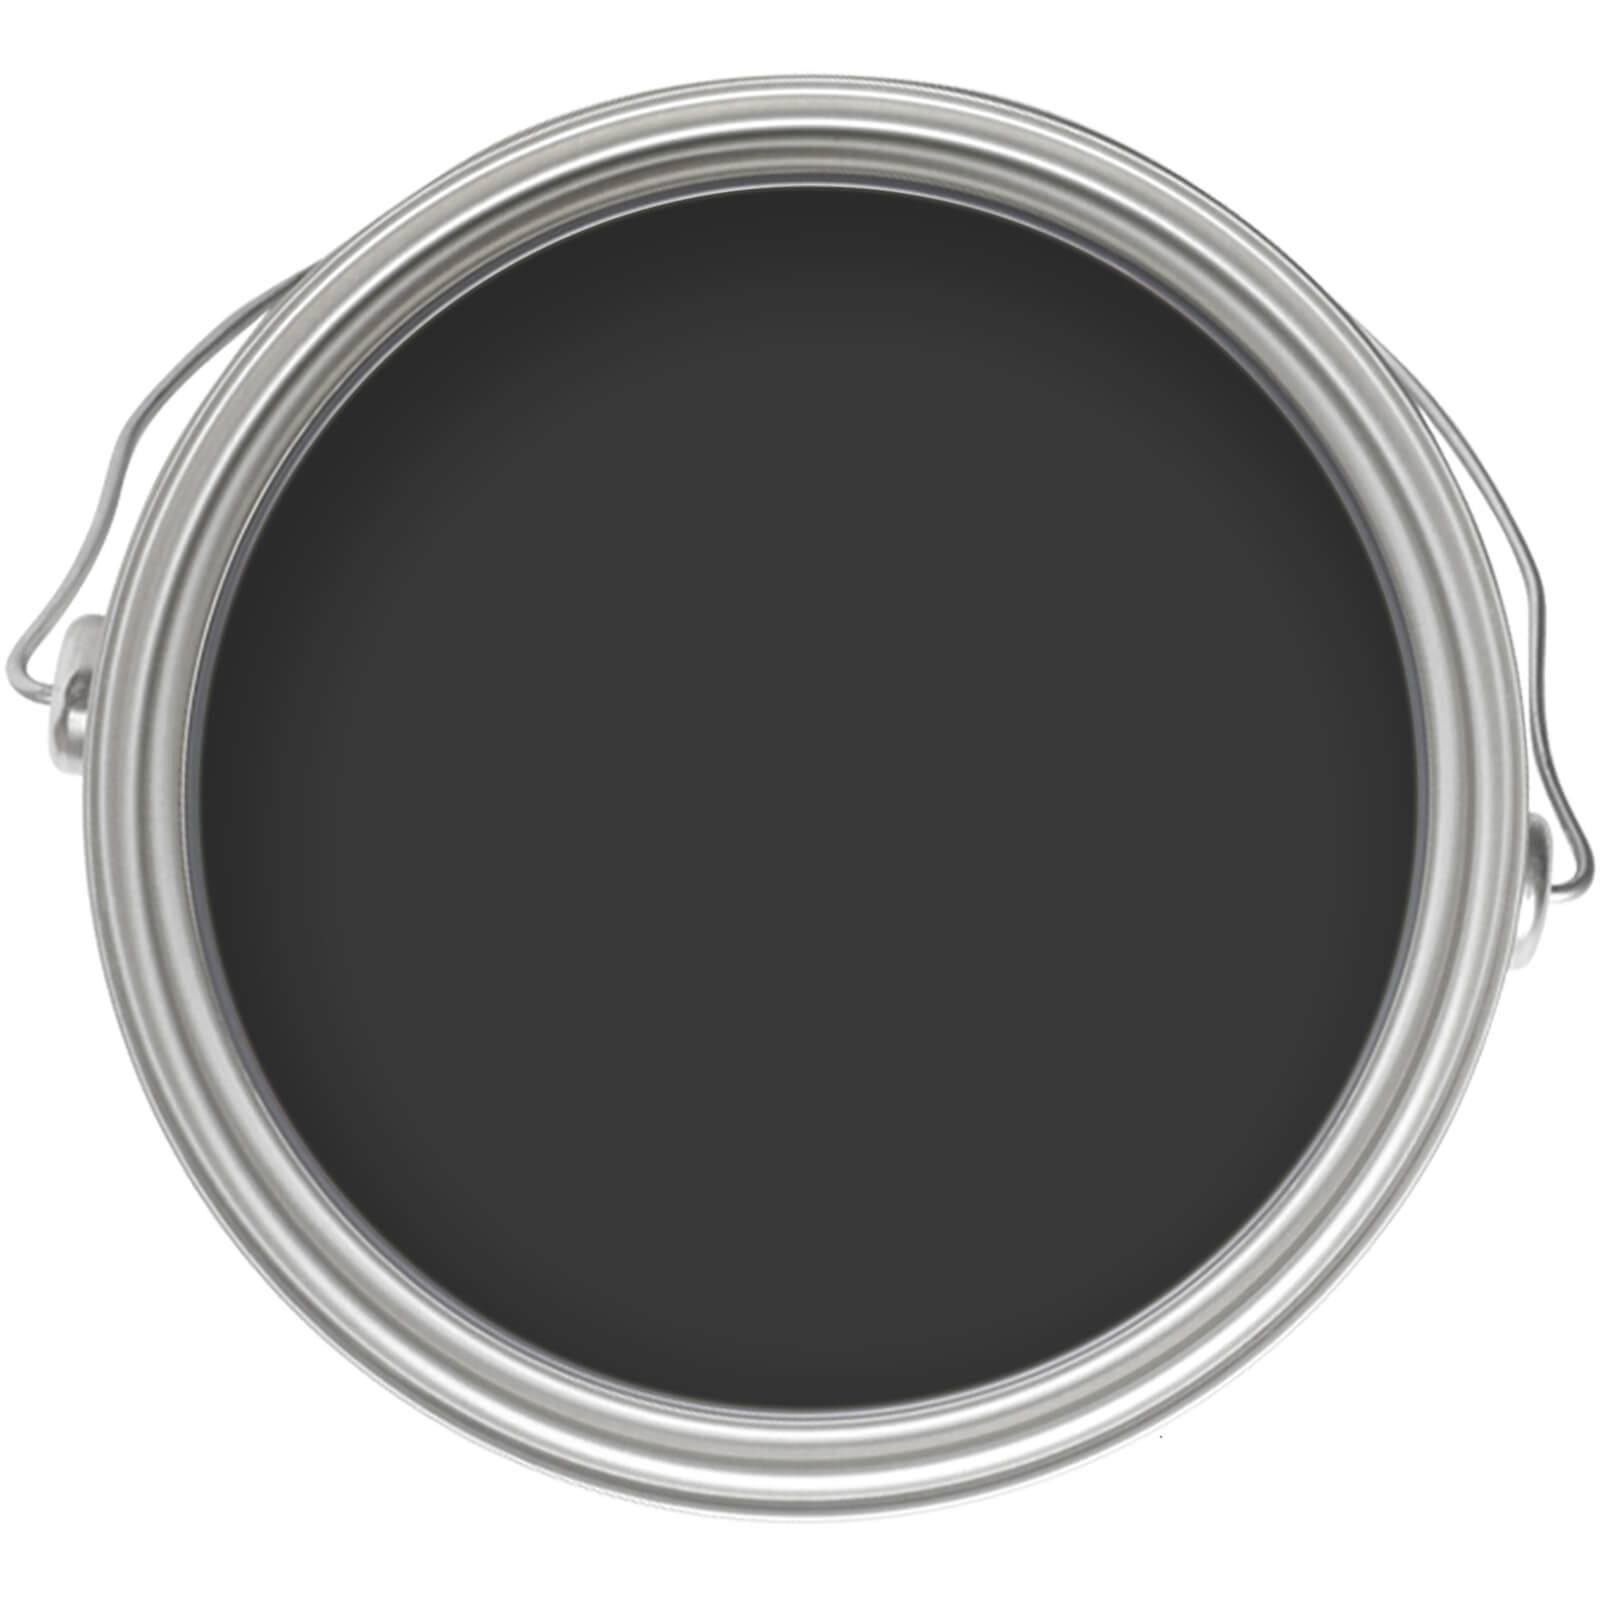 Homebase Smooth Masonry Paint - Black 2.5L